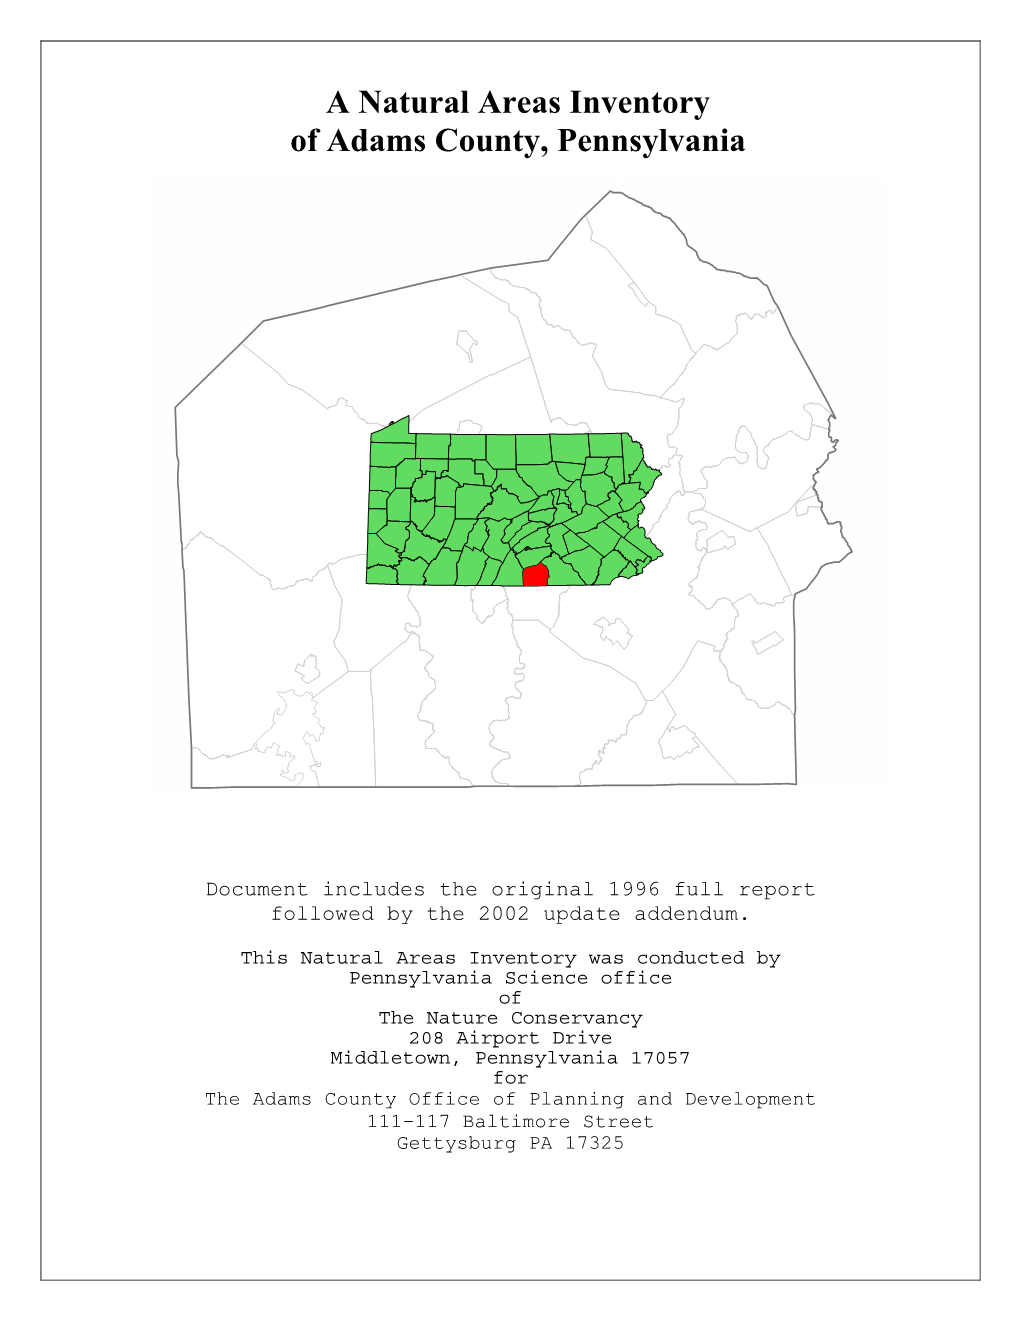 A Natural Areas Inventory of Adams County, Pennsylvania